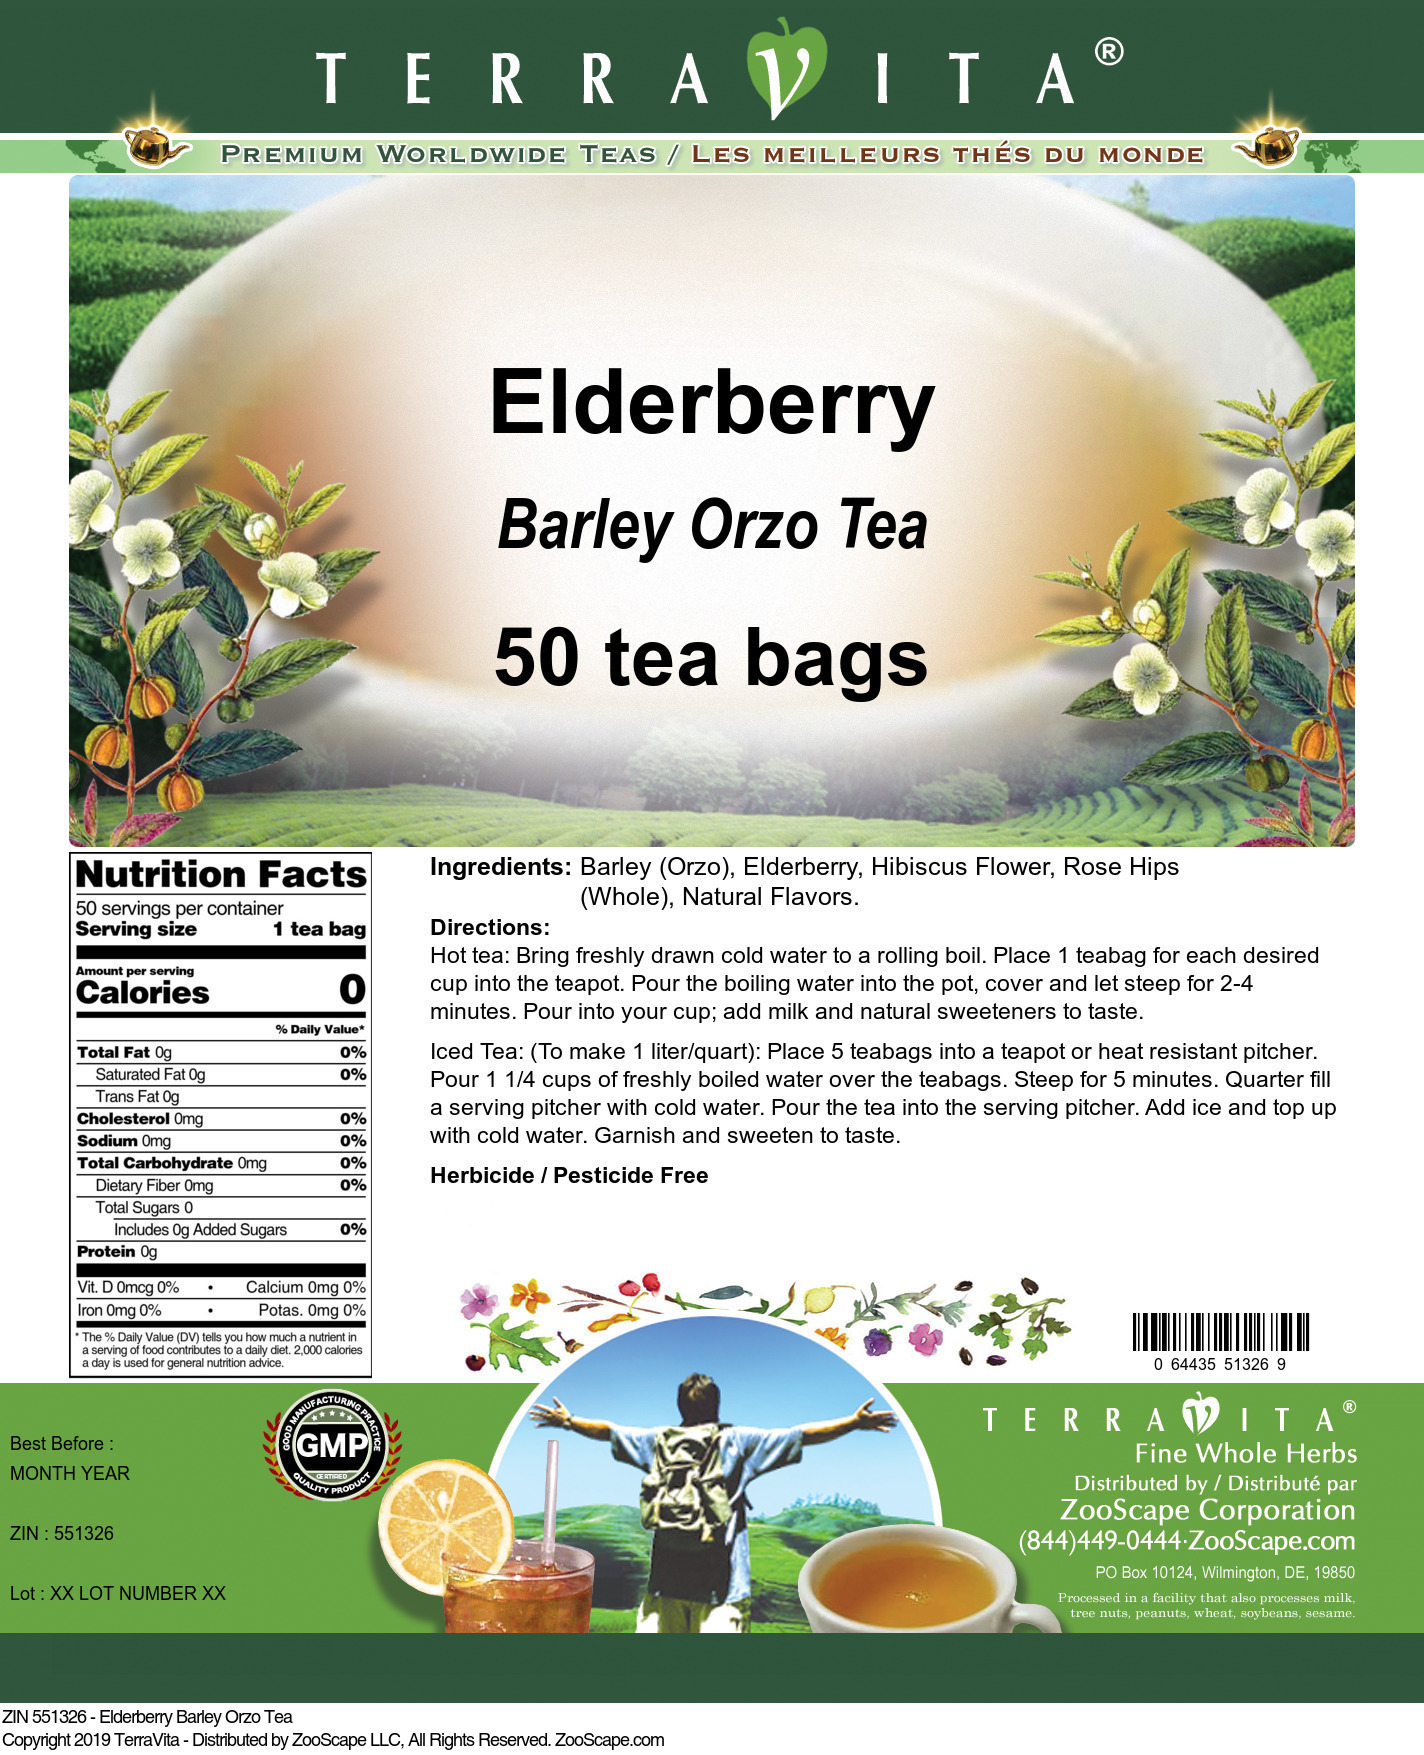 Elderberry Barley Orzo Tea - Label